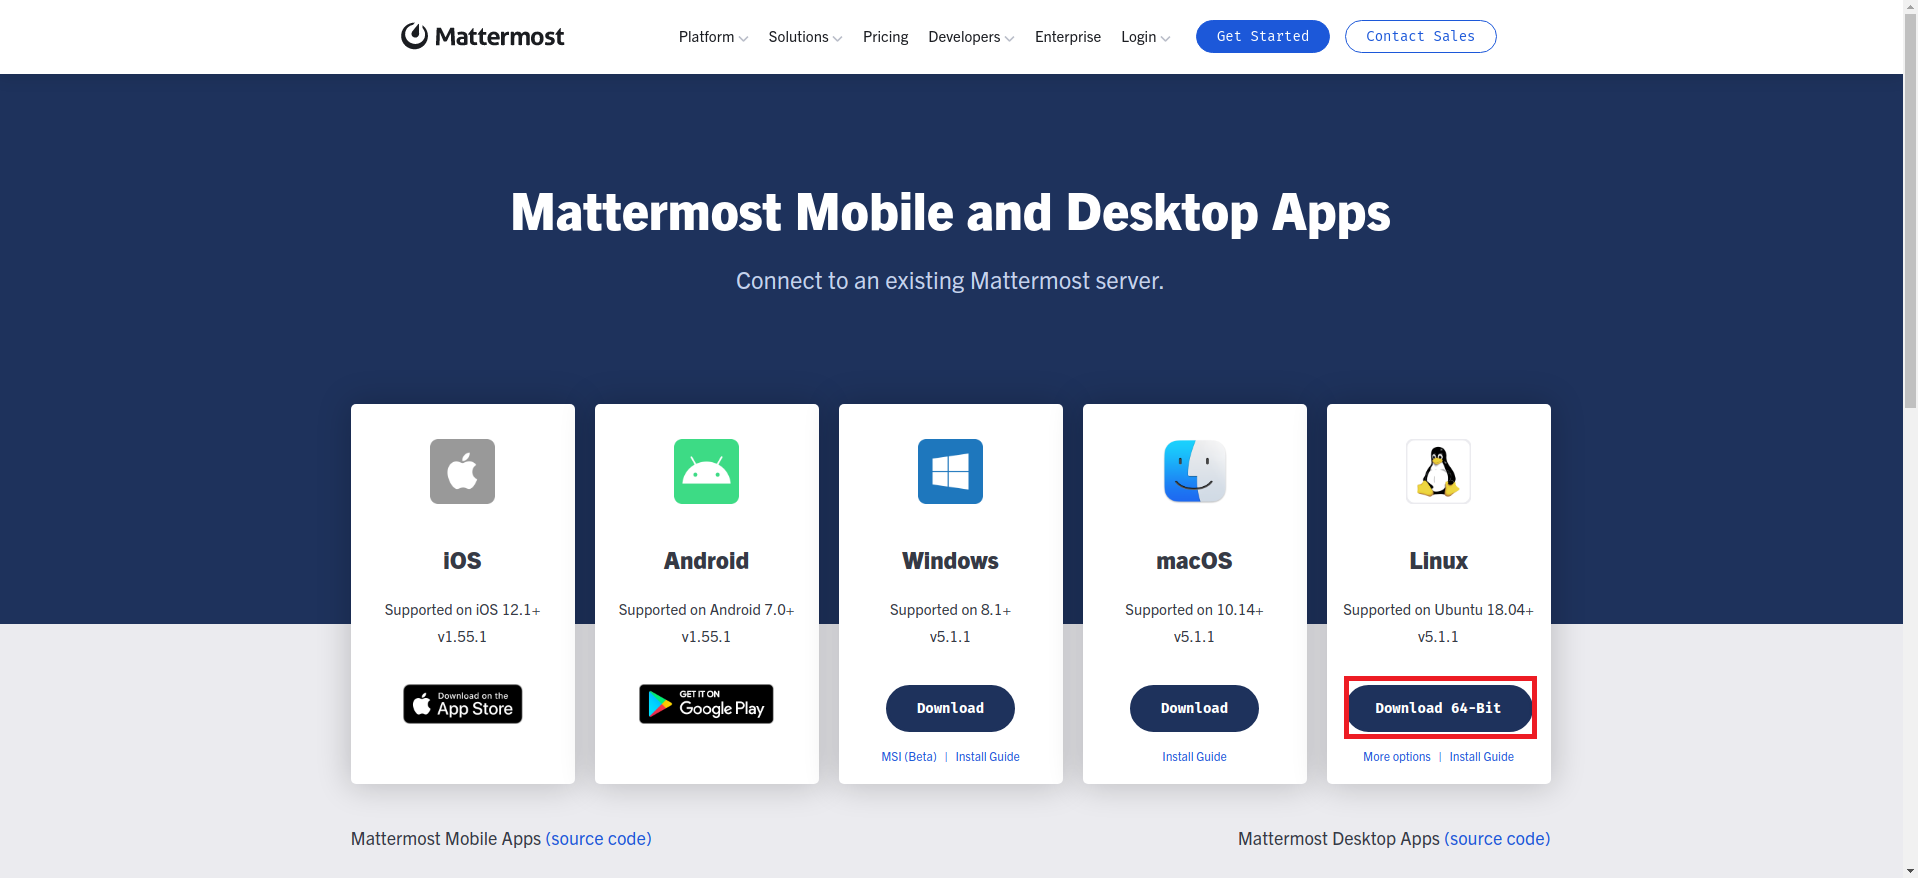 Mattermost Mobile and Desktop Apps画面